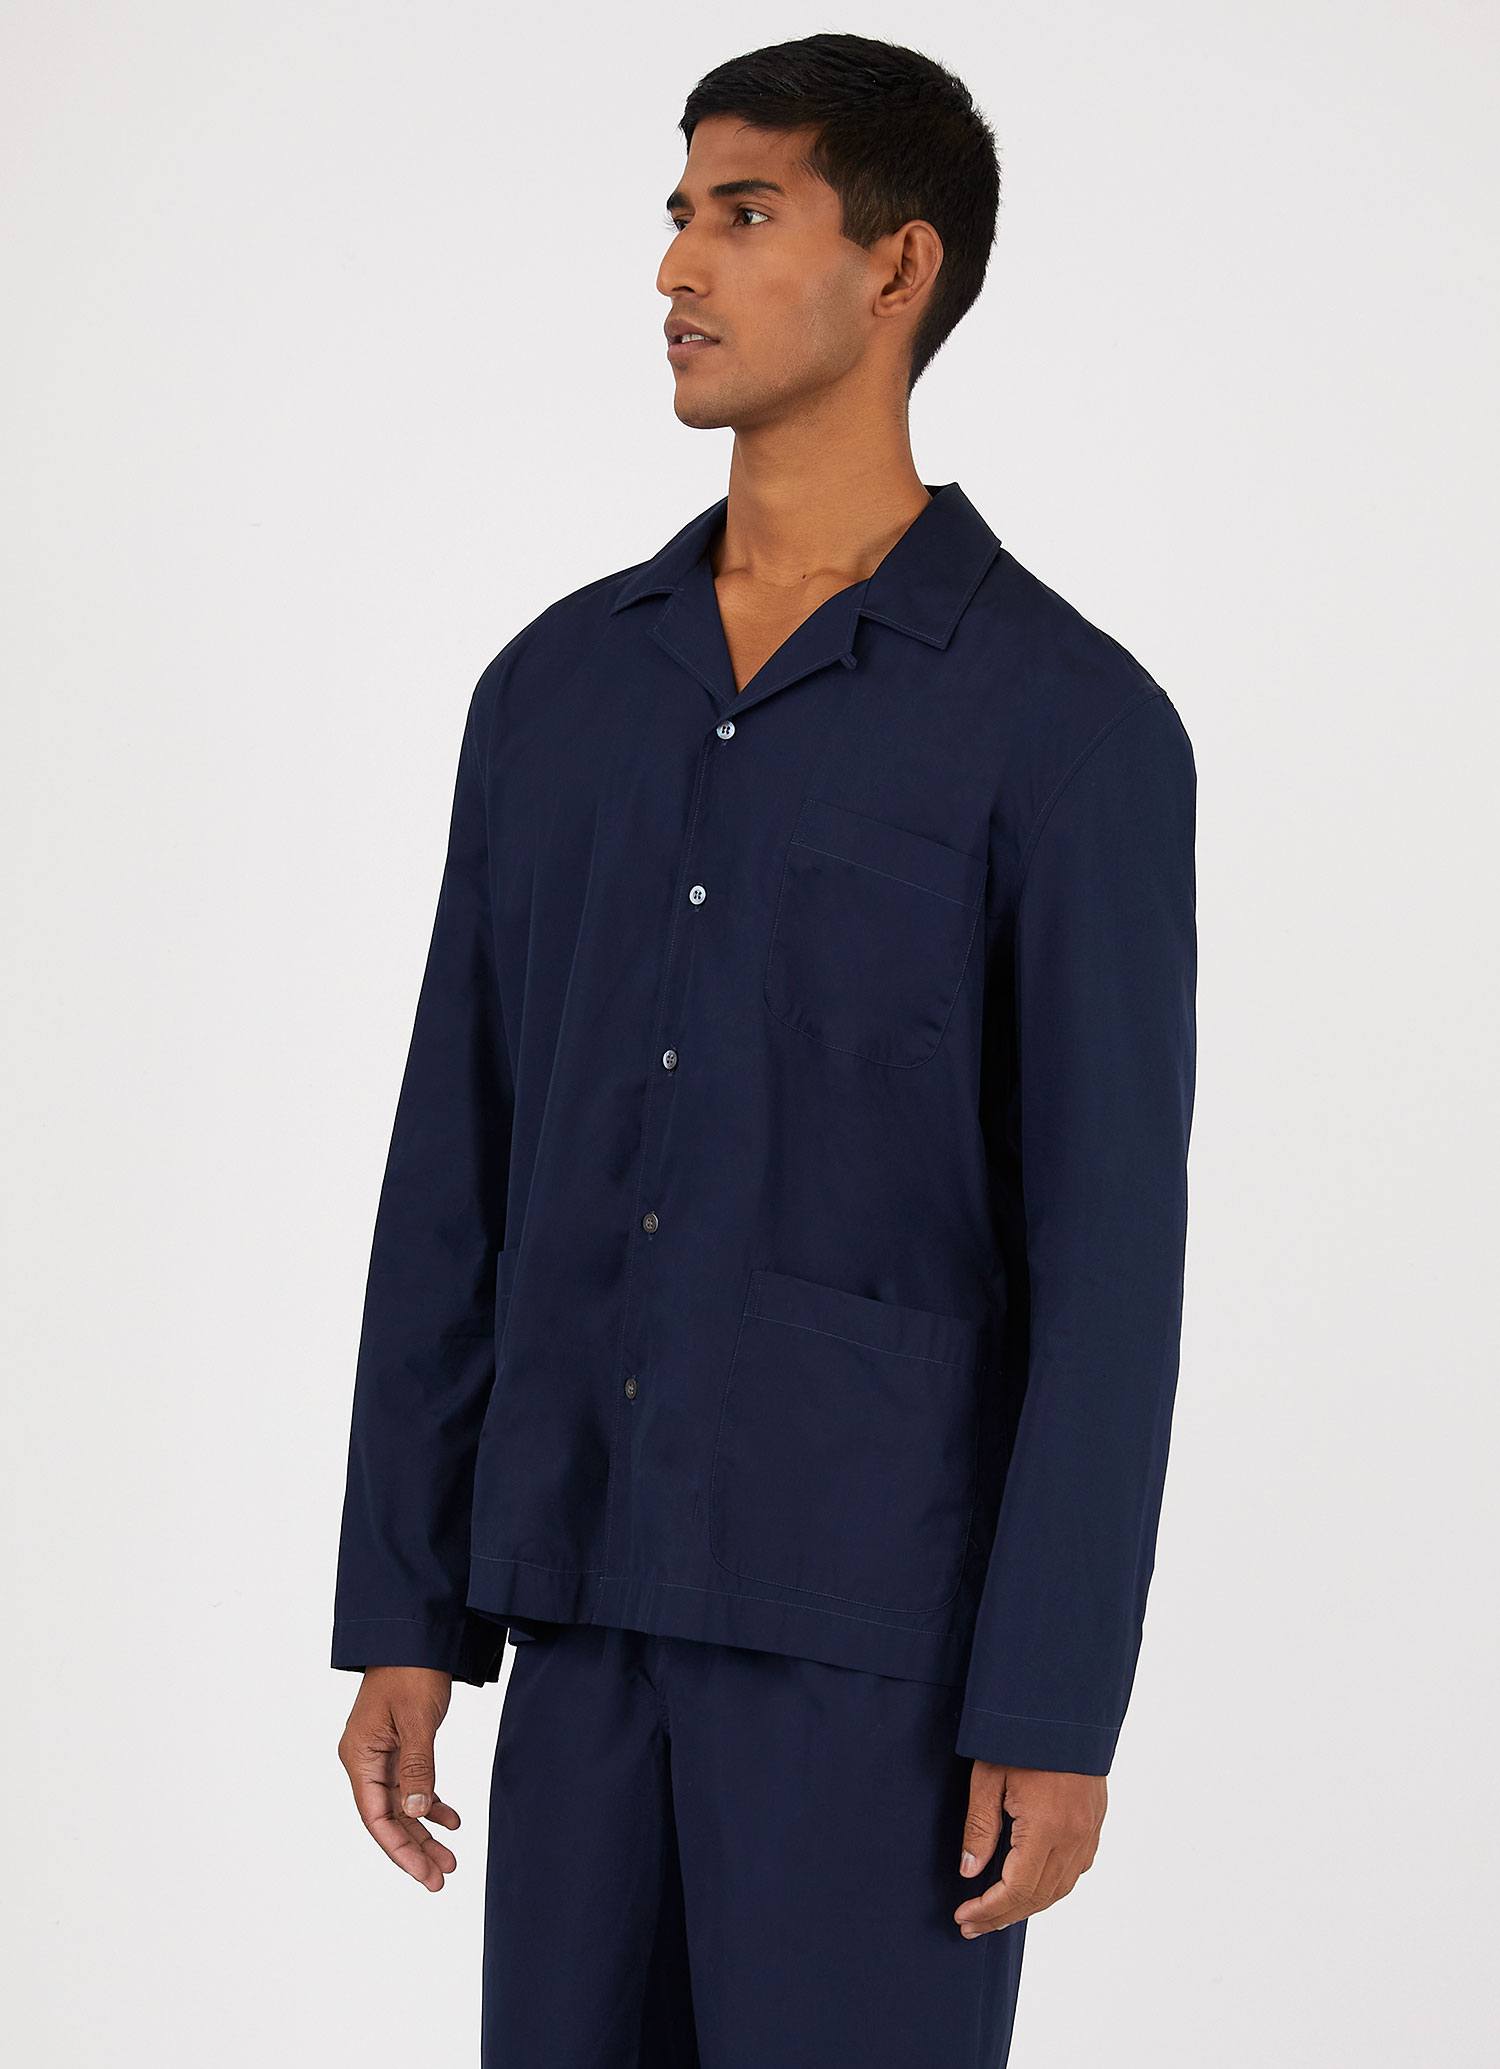 Men's Sea Island Cotton Pyjama Shirt in Navy7